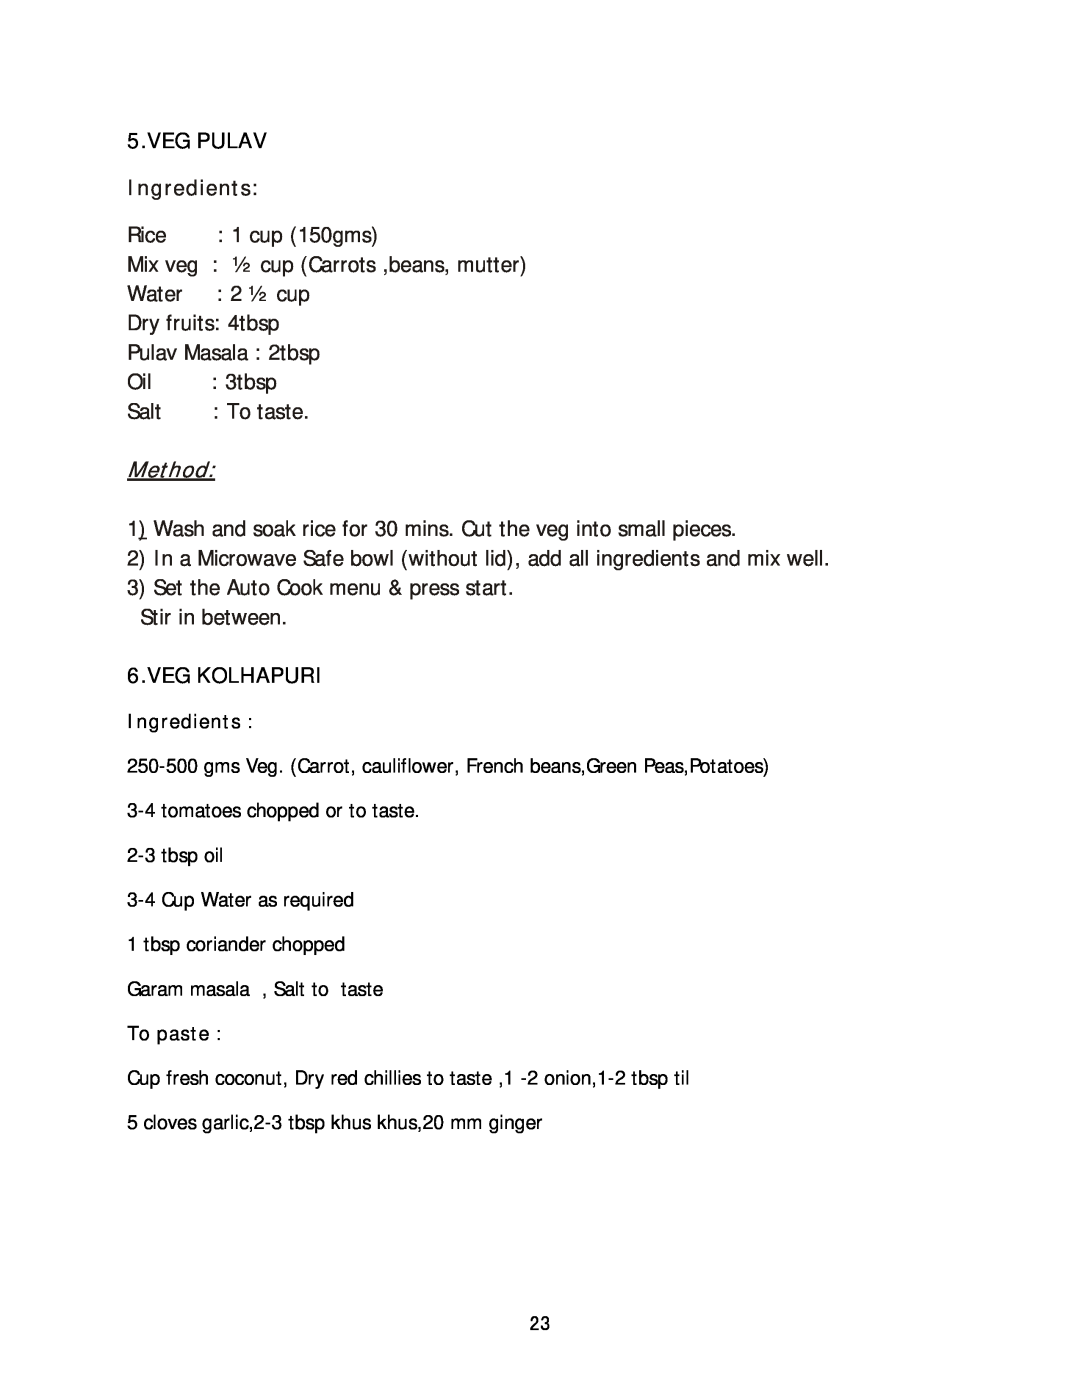 Haier HIL 2810EGCB manual Veg Pulav, Ingredients, Method, Veg Kolhapuri 